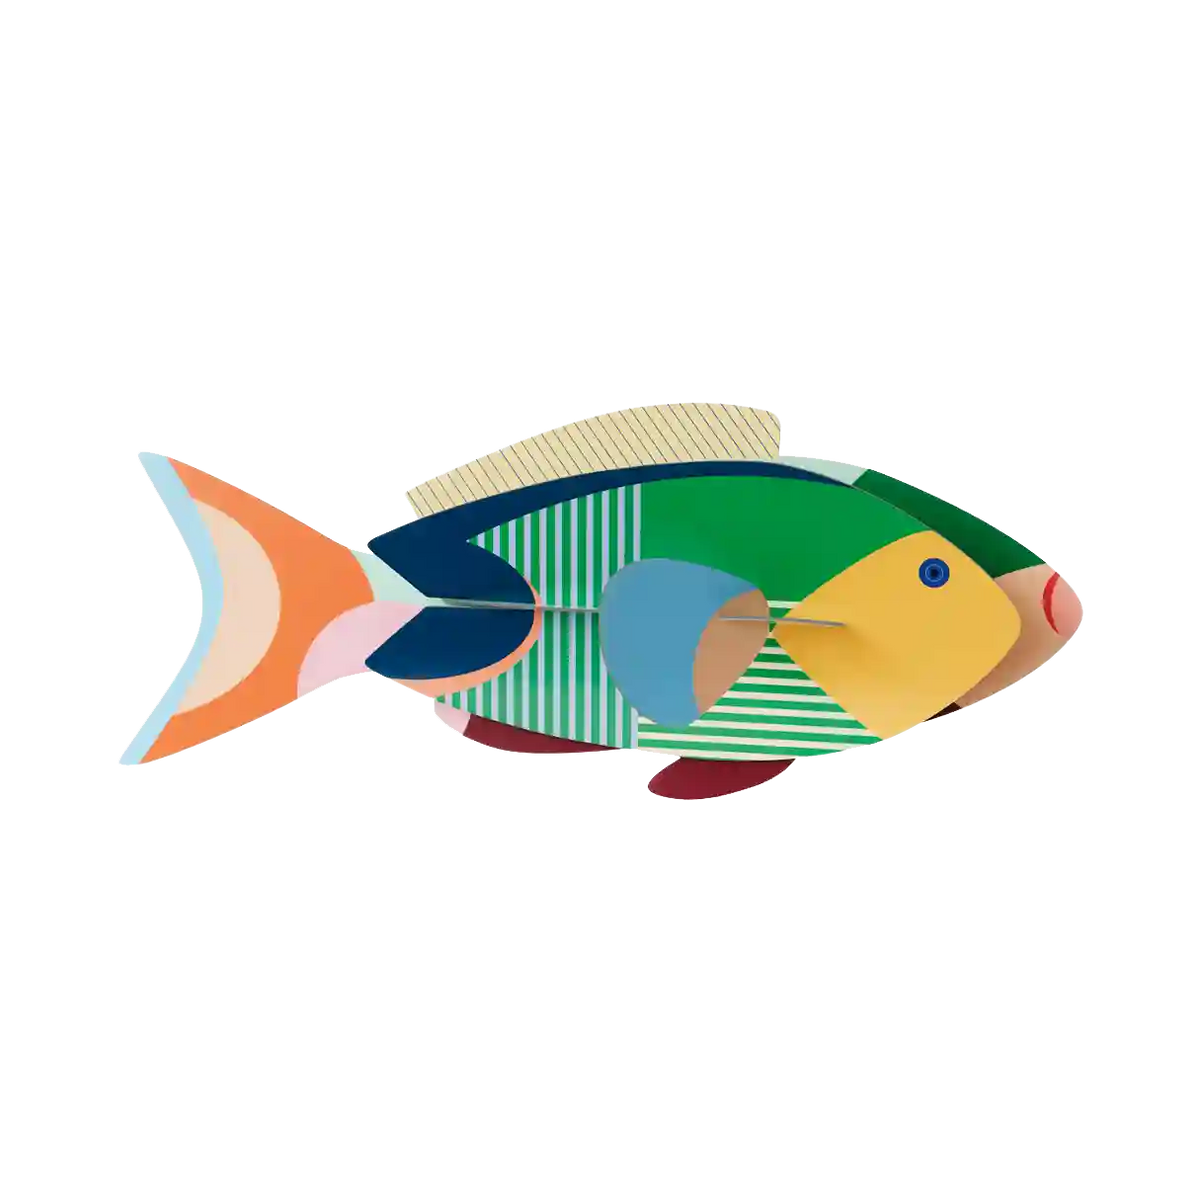 3D Mobile / 3D Objekt / Mobile - Luna Fish